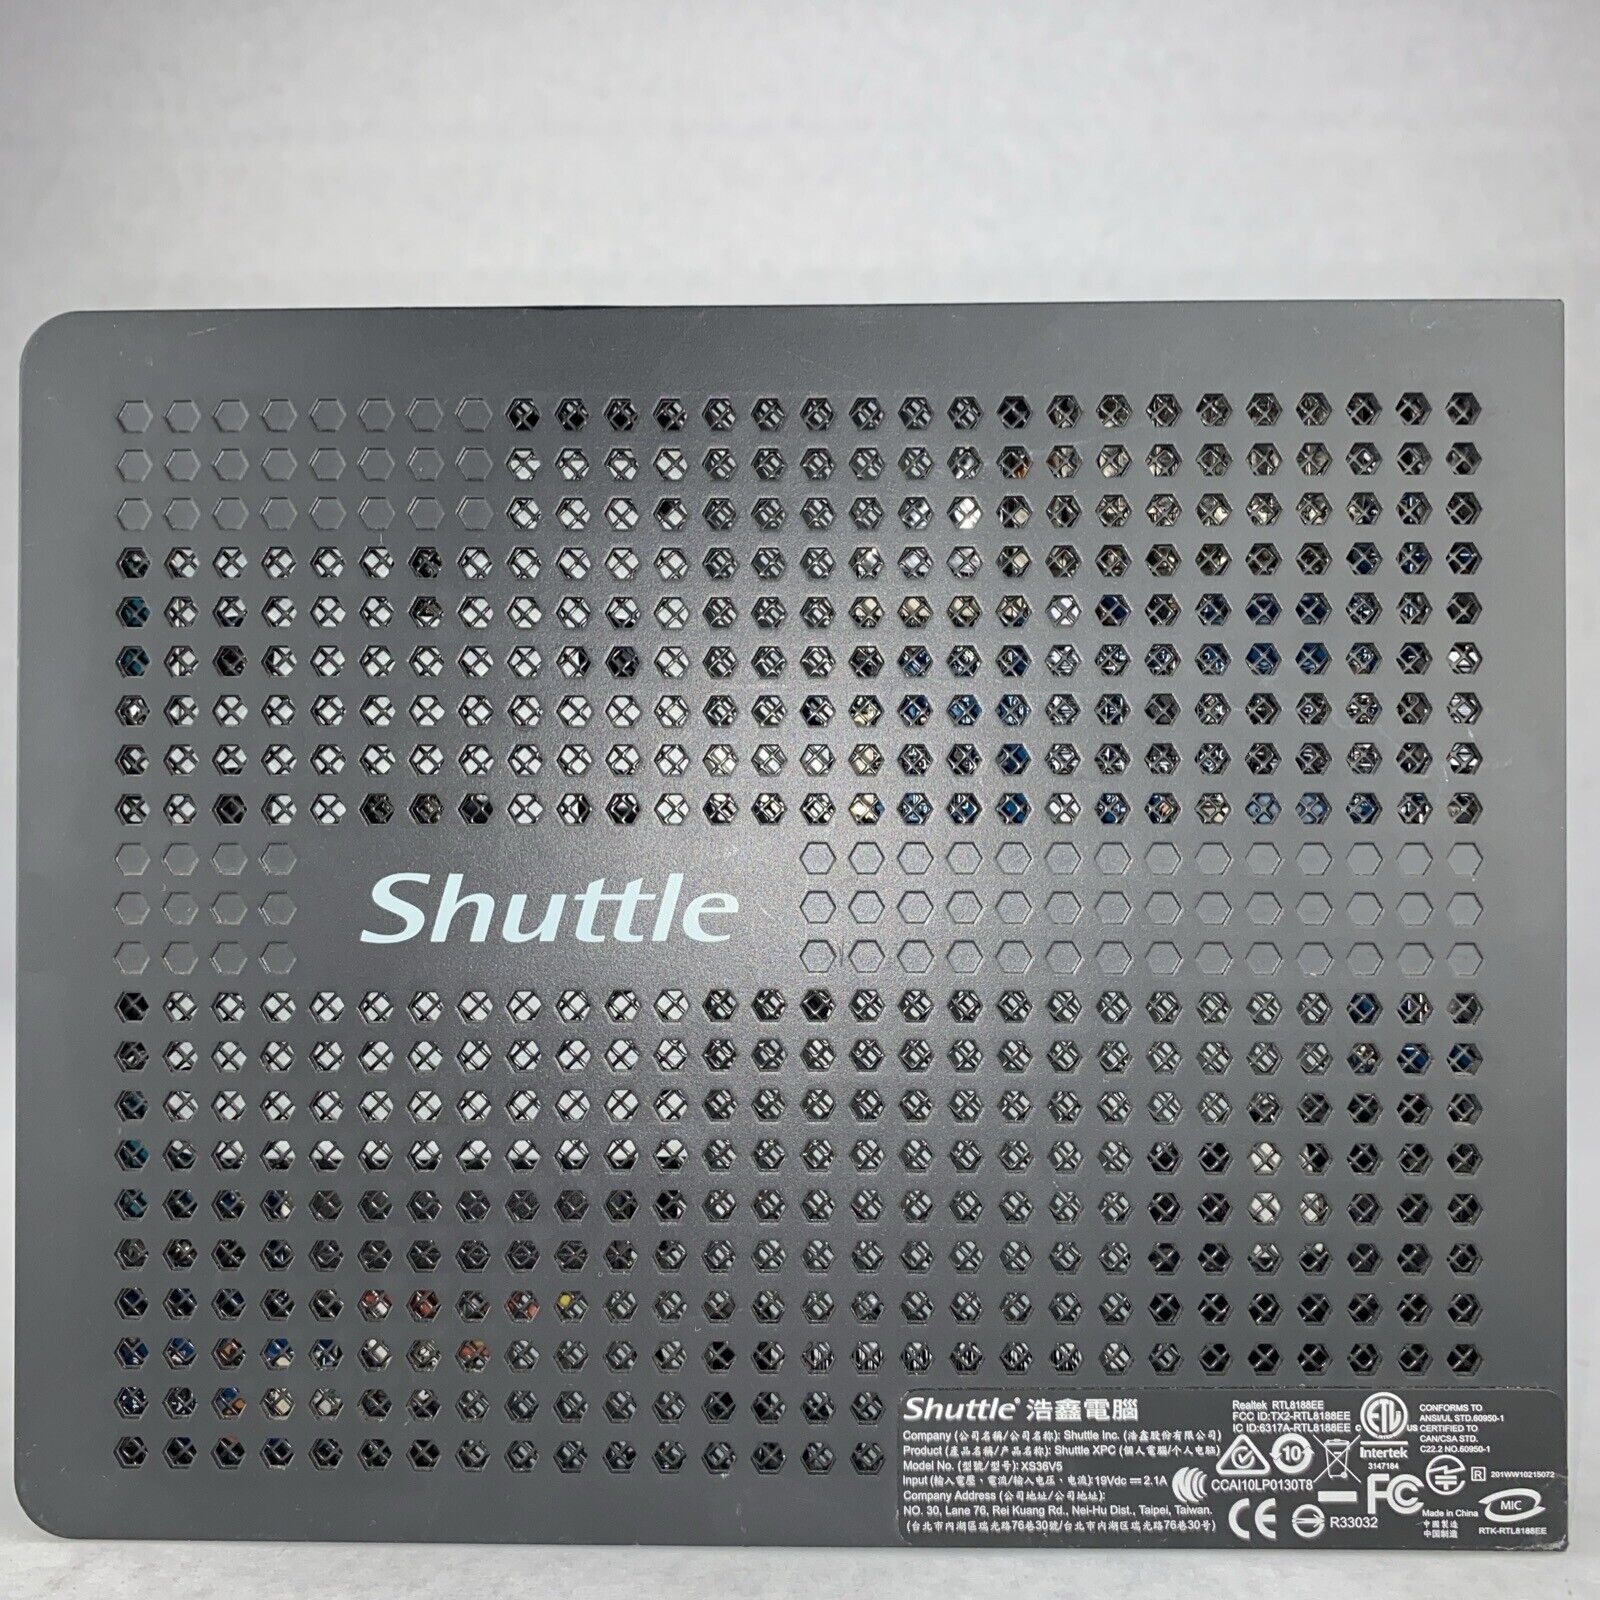 Shuttle XPC XS36V5 Mini Intel Celeron N3050 1.60GHz 4GB RAM WiFi No HDD OS No AC